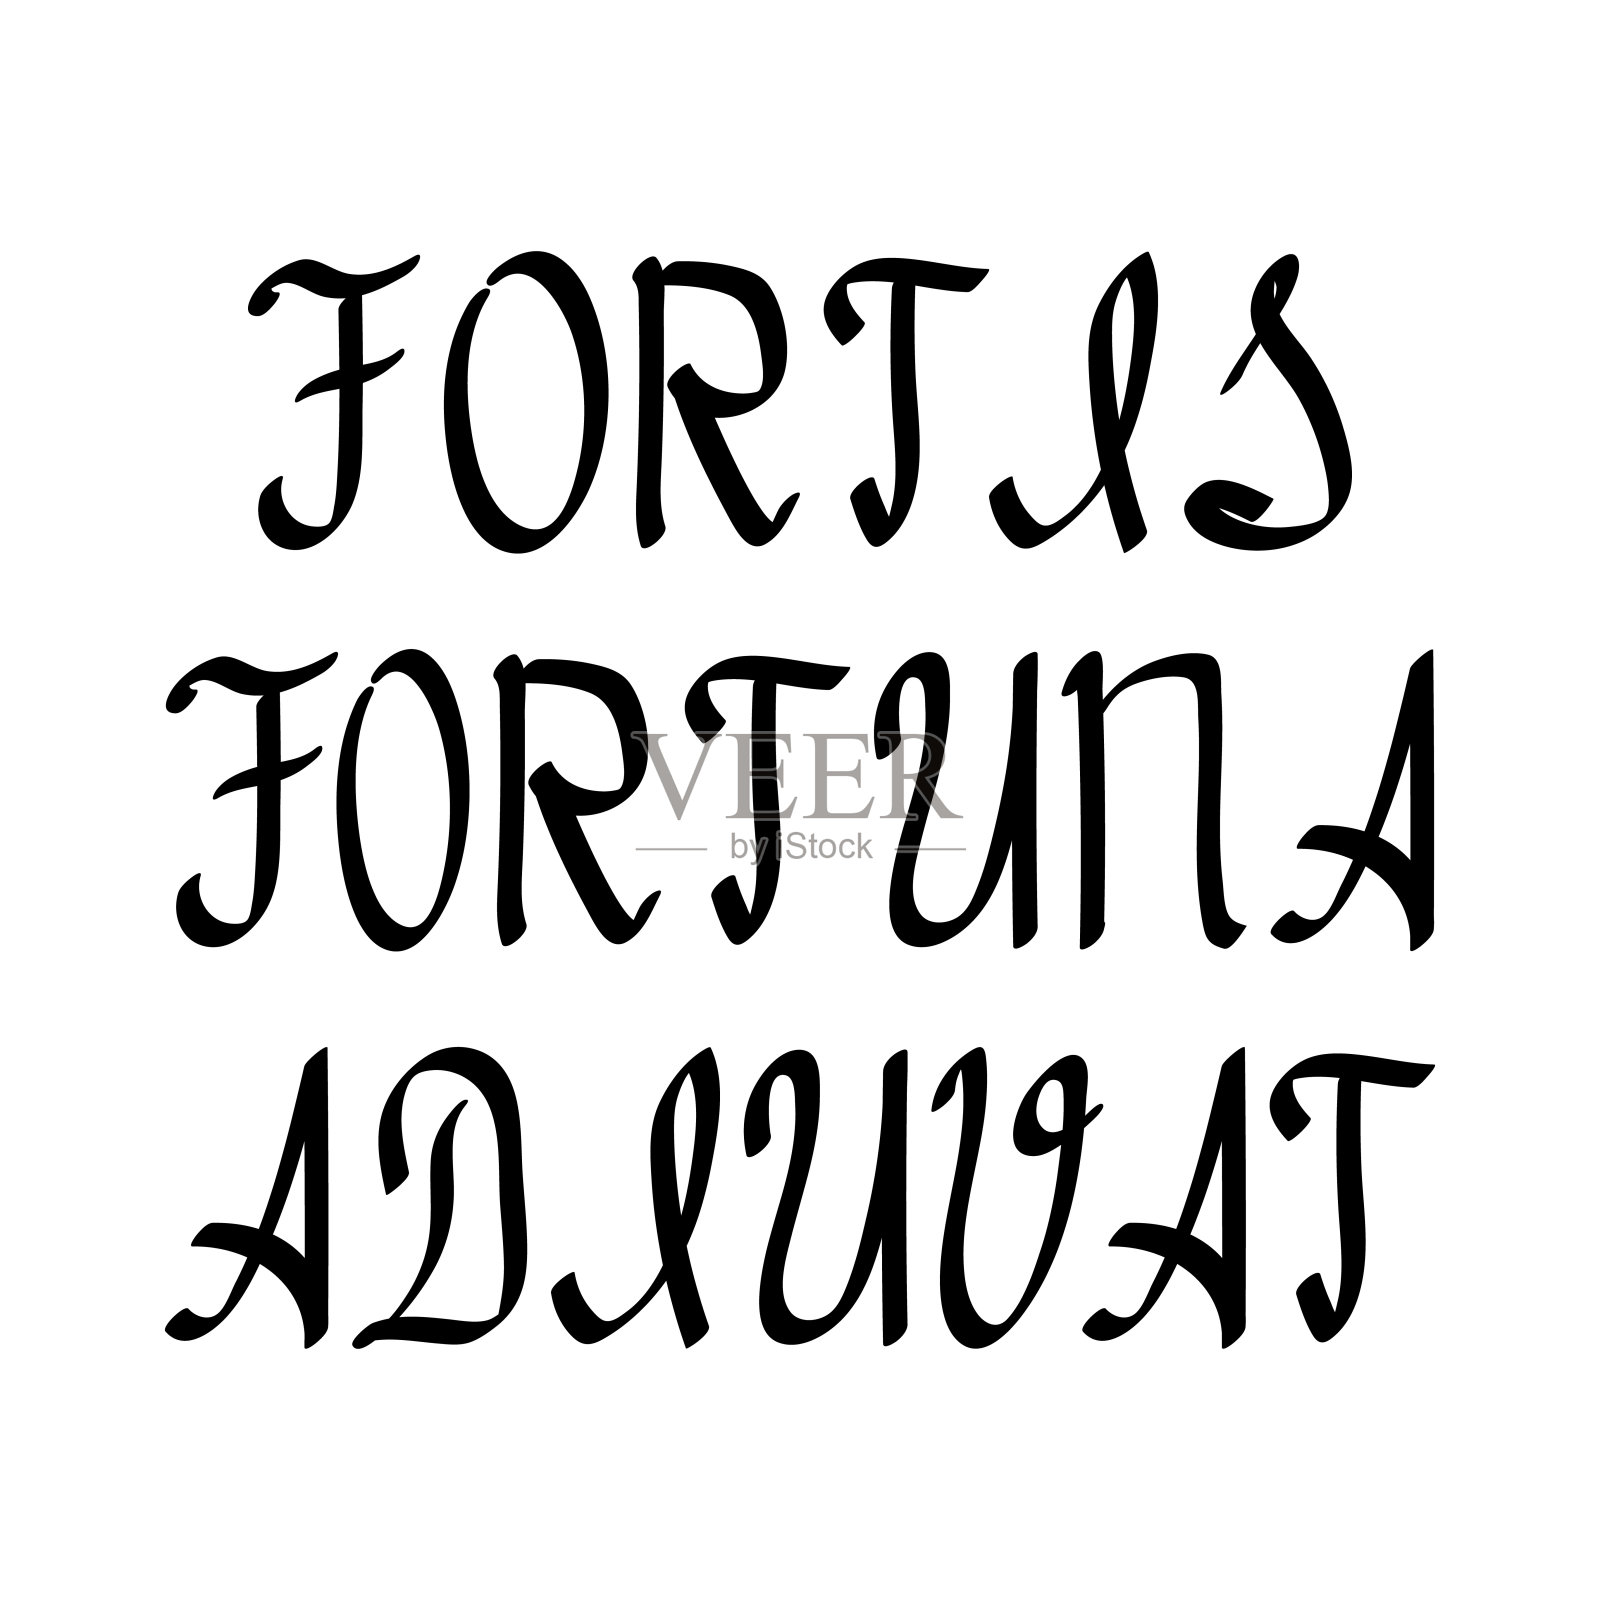 “Fortis fortuna adiuvat”是一句谚语，意思是“财富爱粗体”，题词用拉丁字母和不同粗细的黑色毛笔在白色背景上。矢量插图。设计元素图片